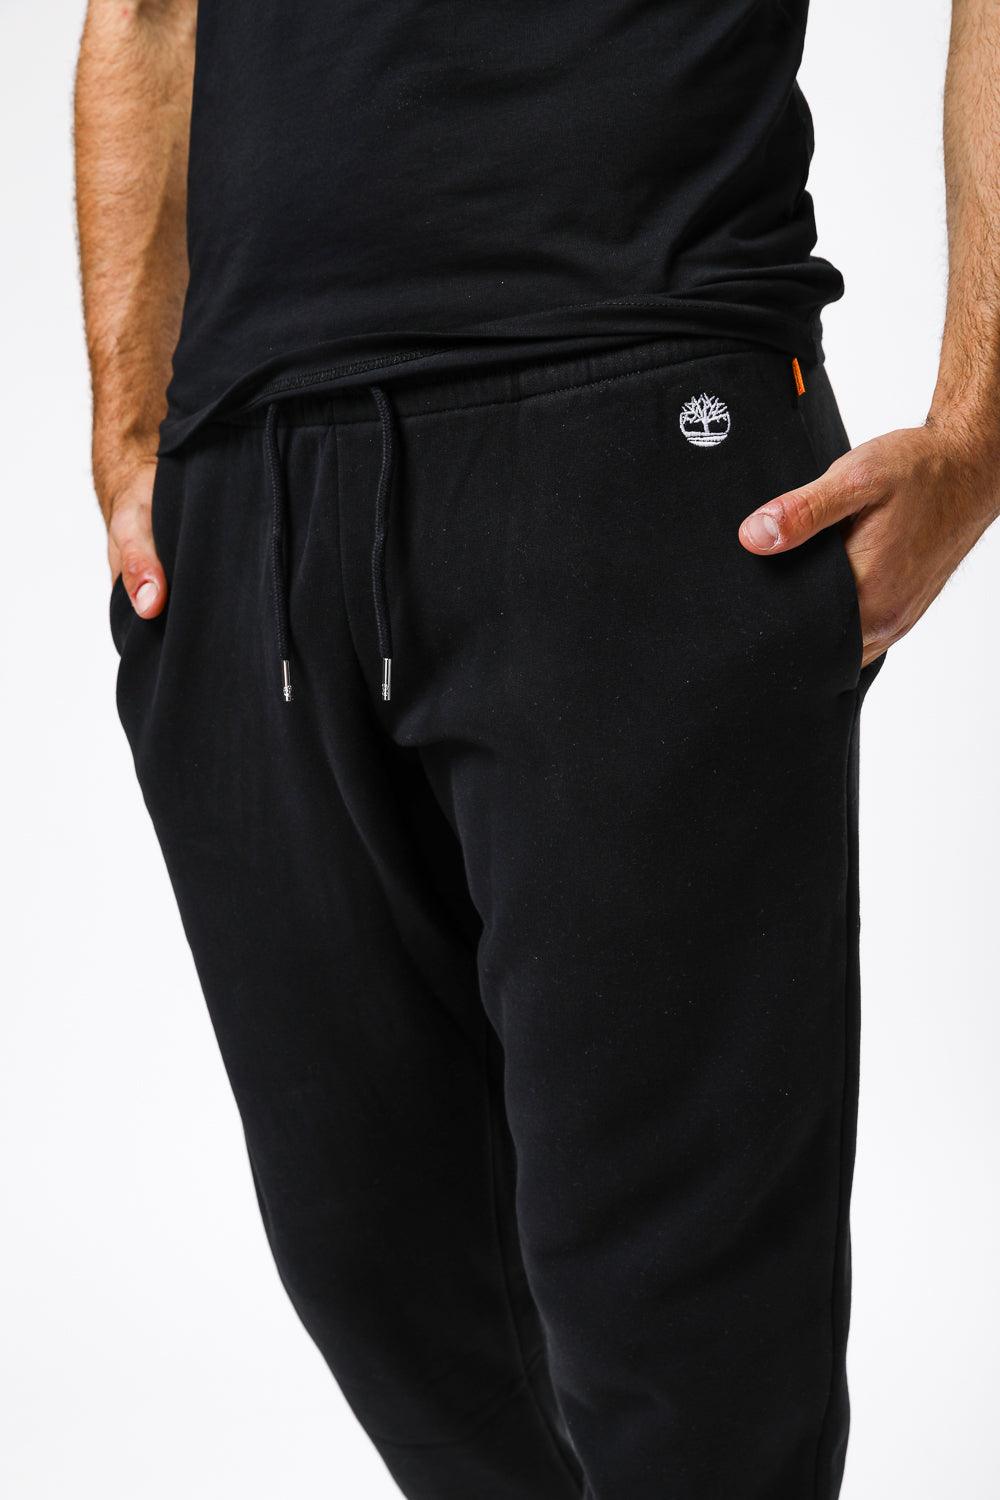 TIMBERLAND - מכנסי טרנינג עם לוגו המותג רקום בצד צבע שחור - MASHBIR//365